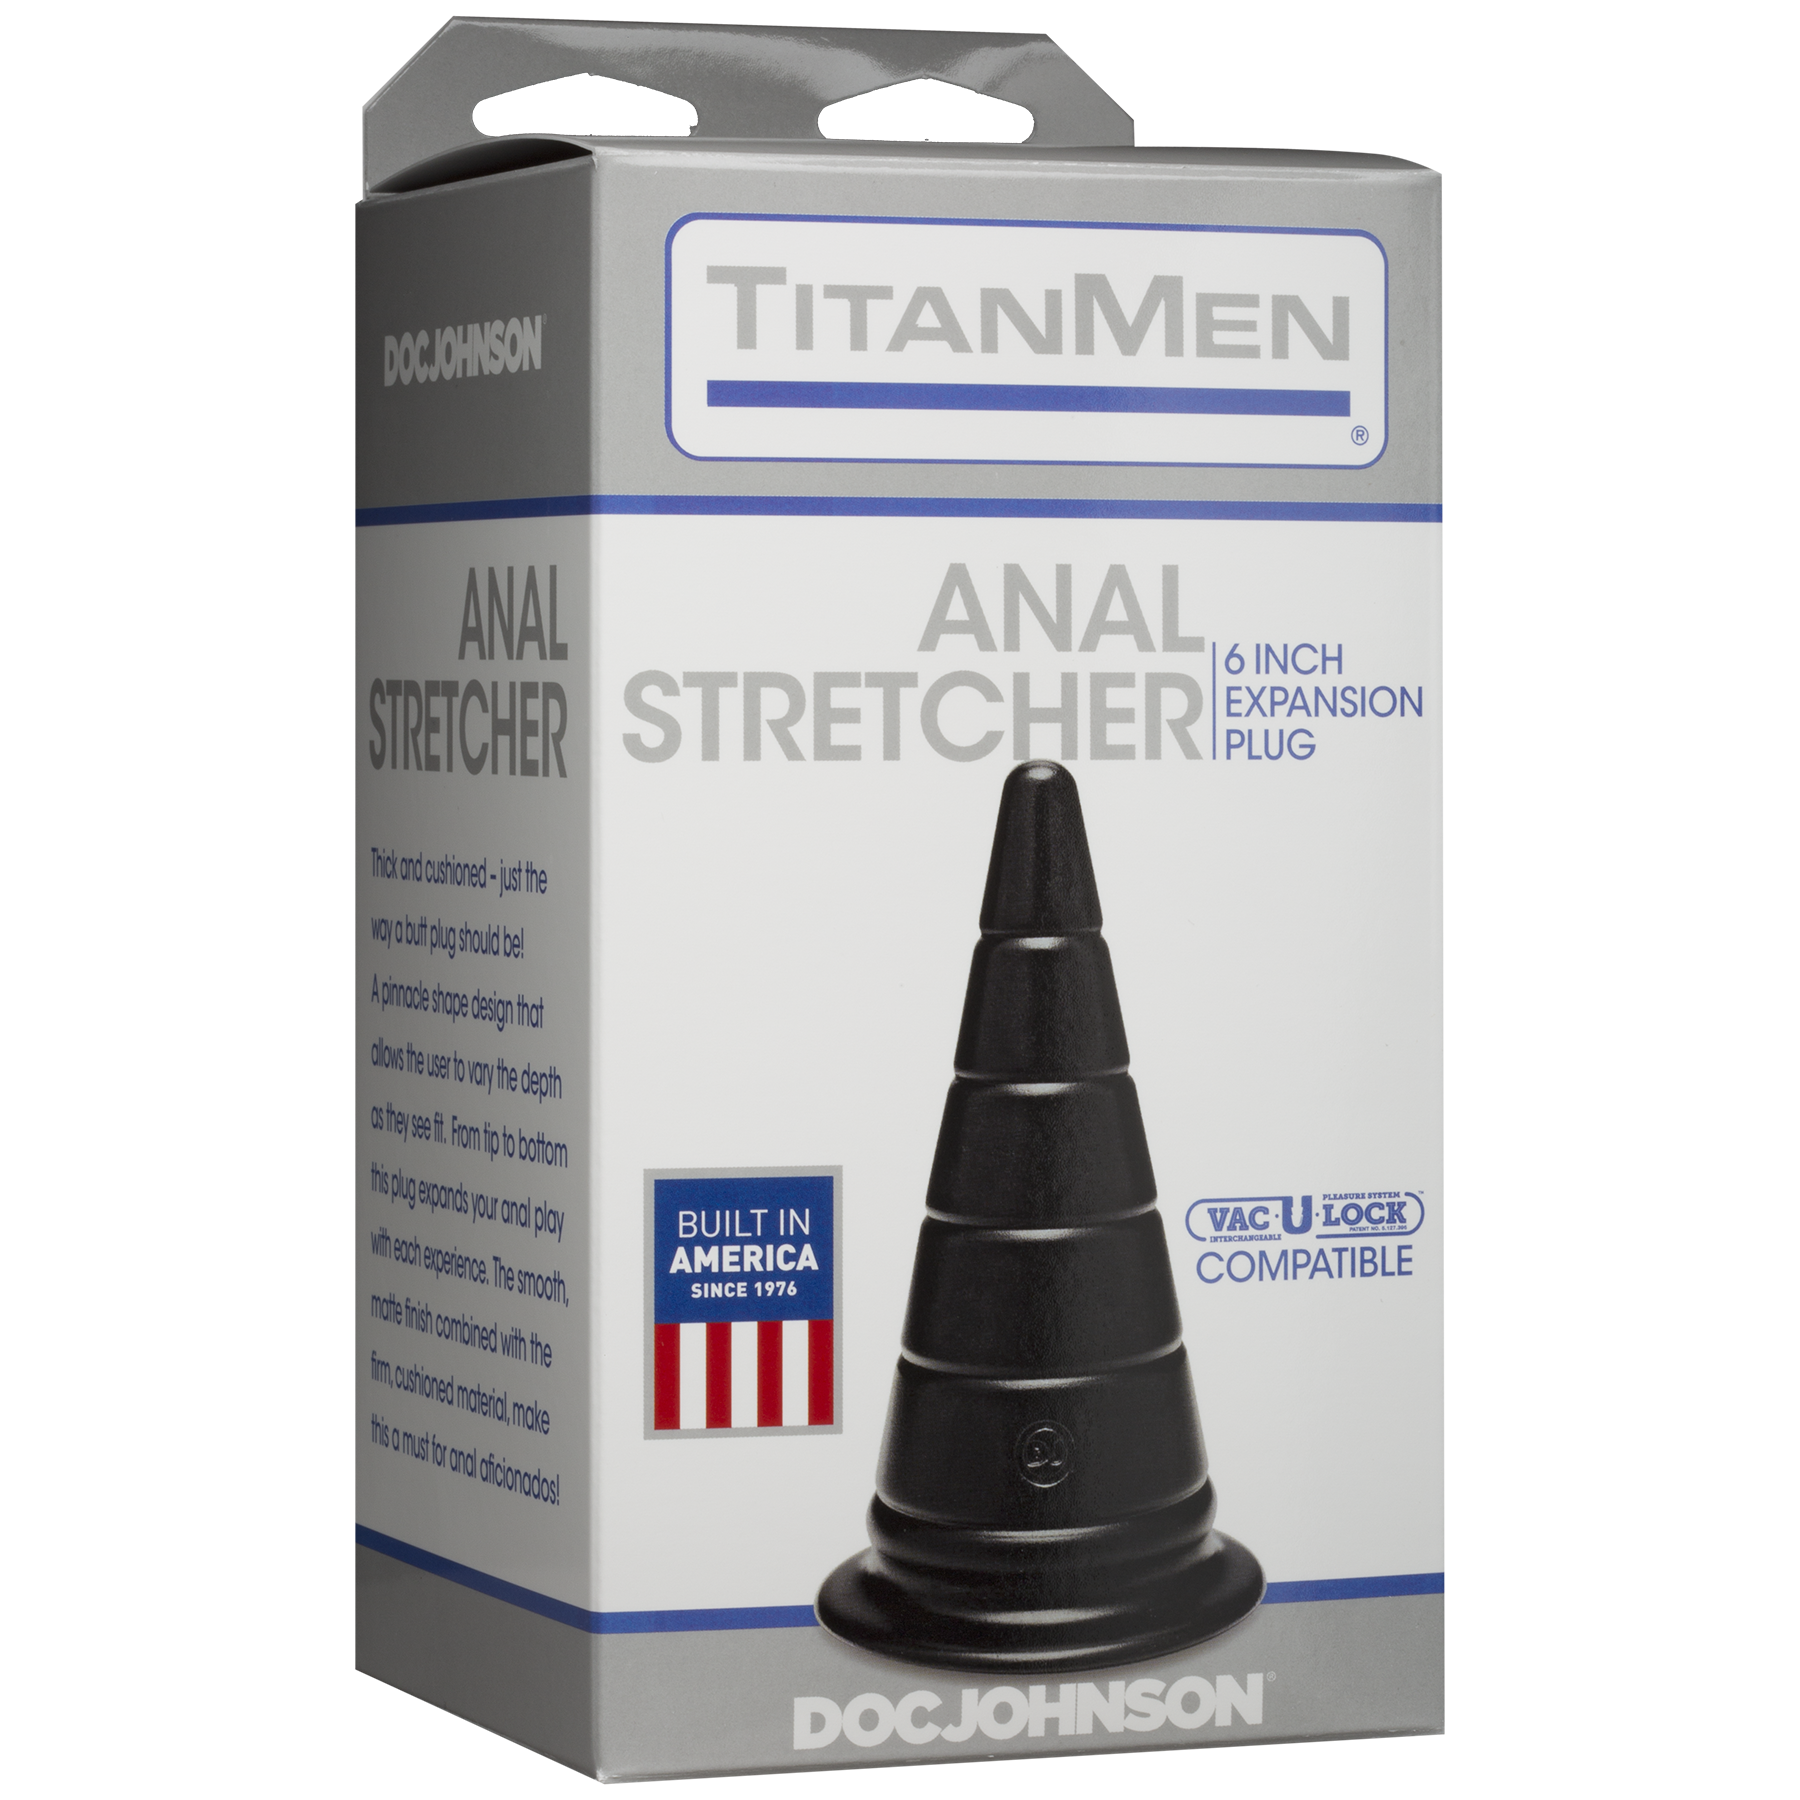 TitanMen - Anal Stretcher - 6 Inch Expansion Plug